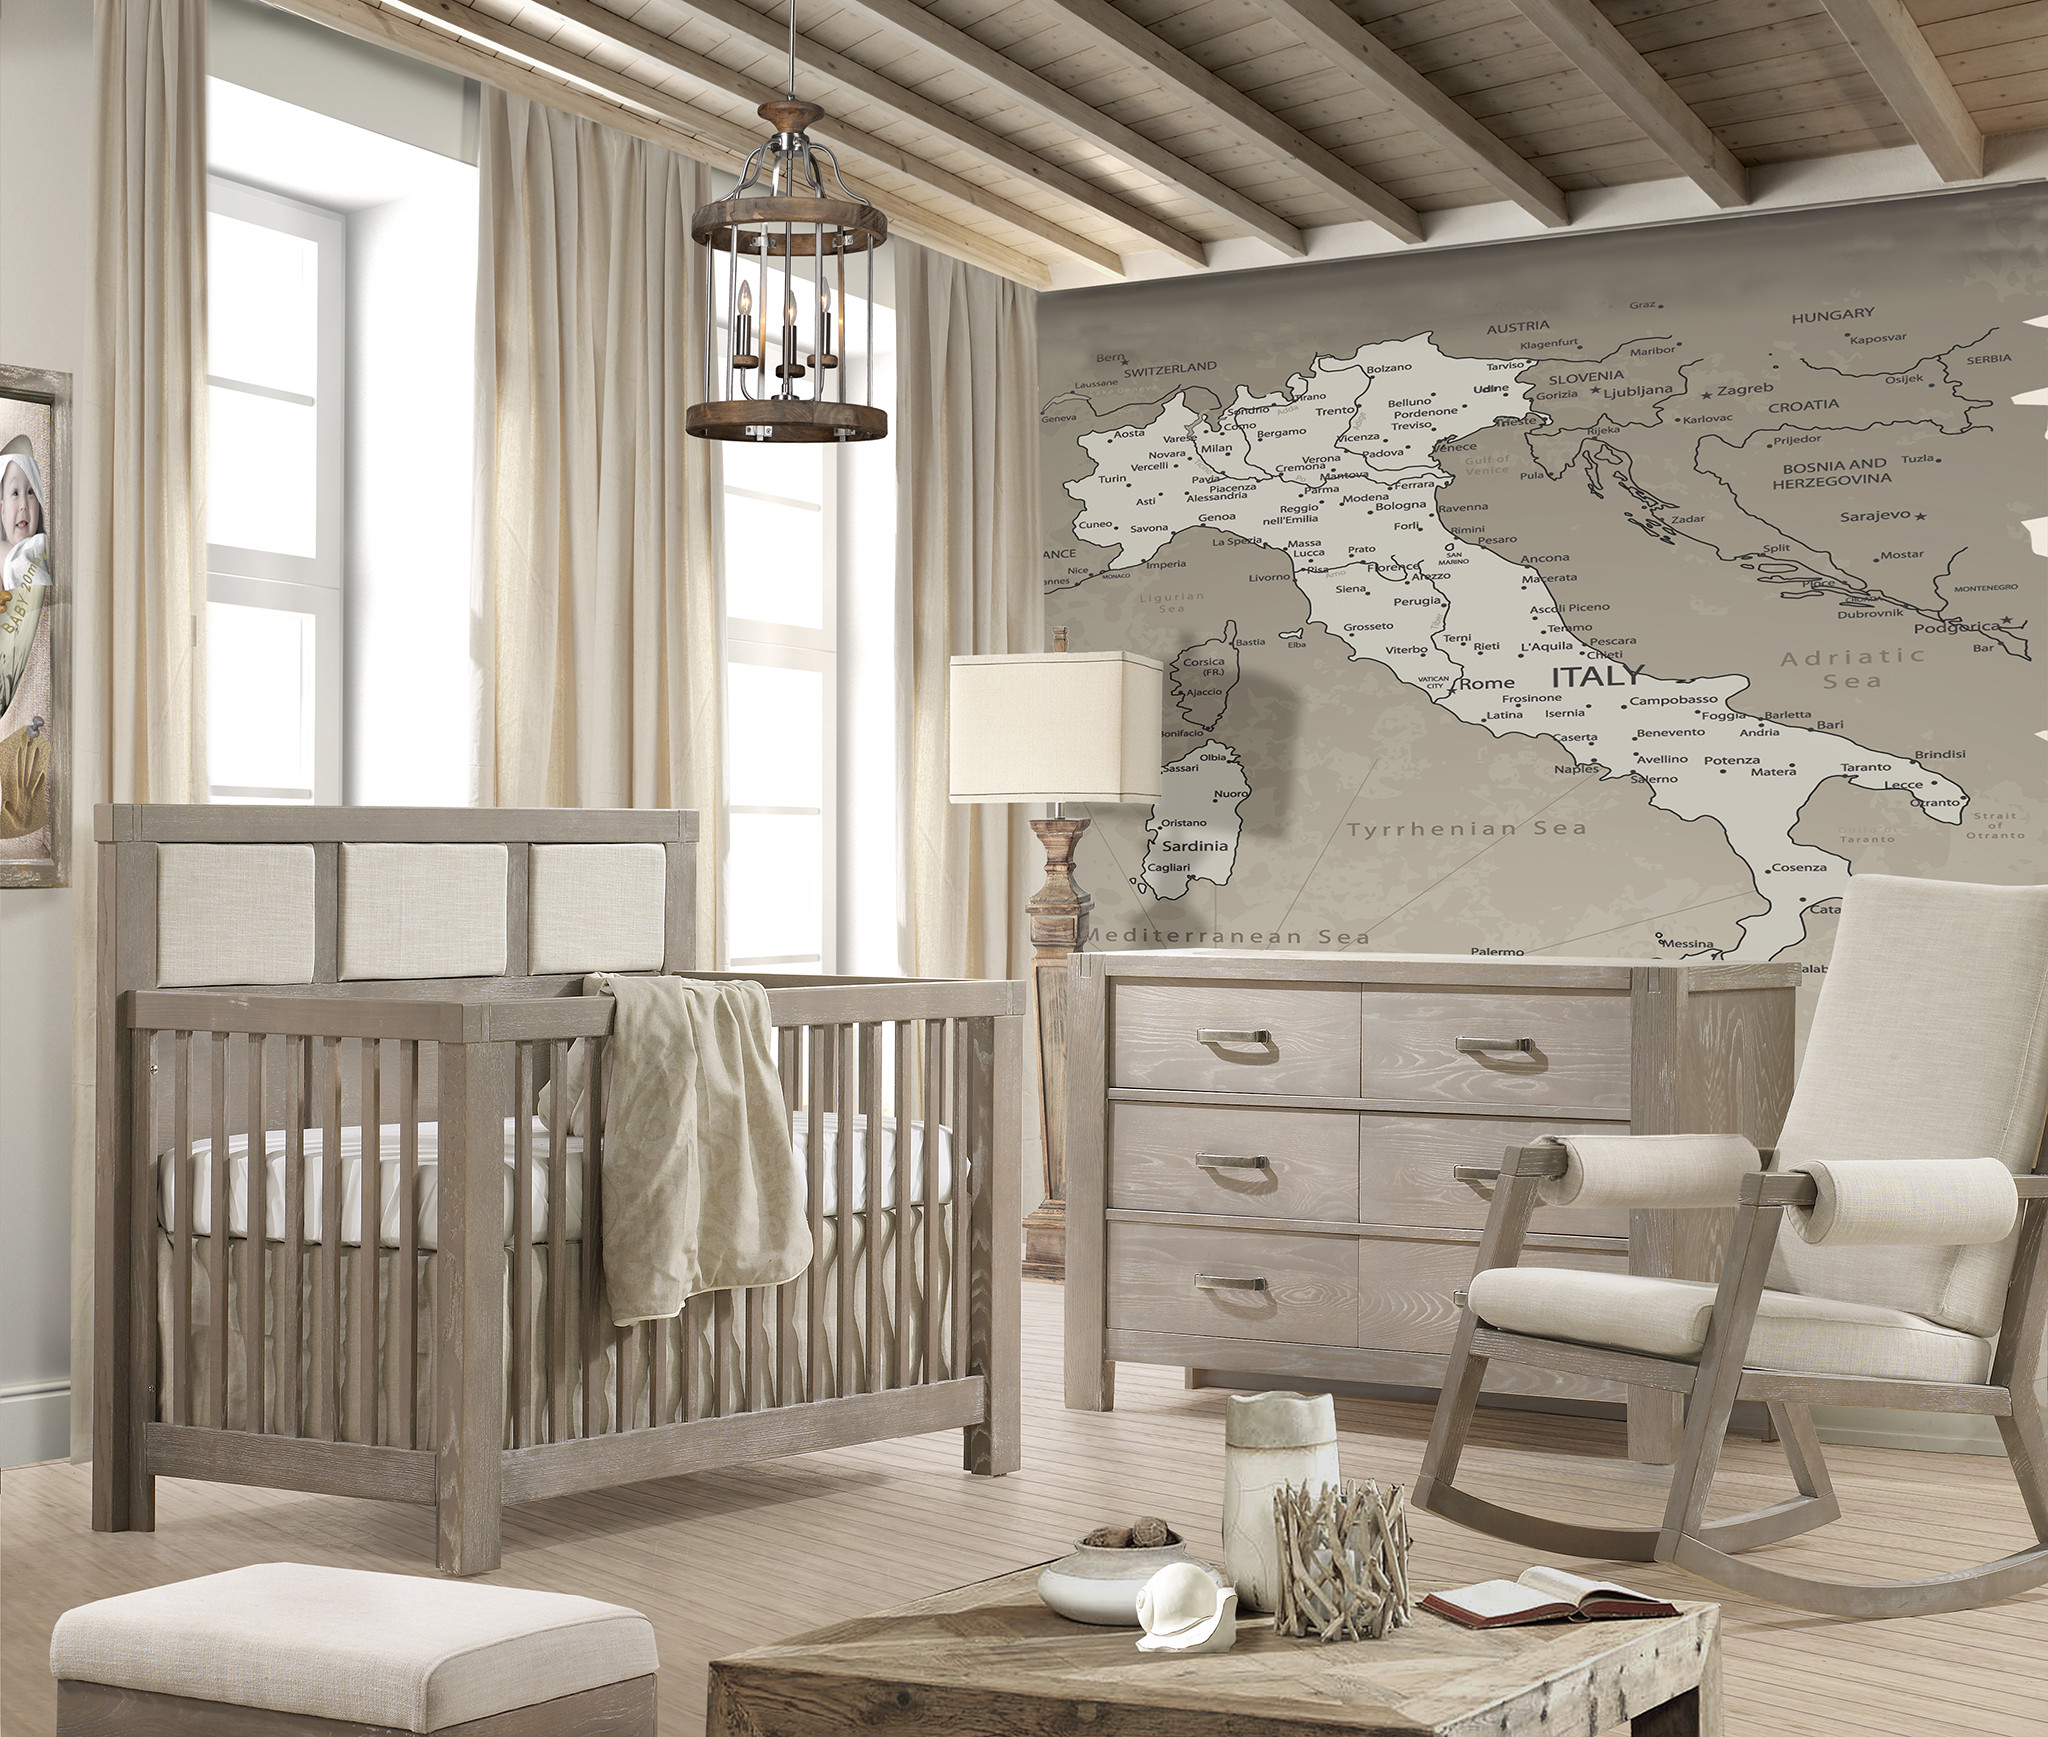 Rustic Baby Bedroom
 Bringing Italian Design into the Nursery Project Nursery